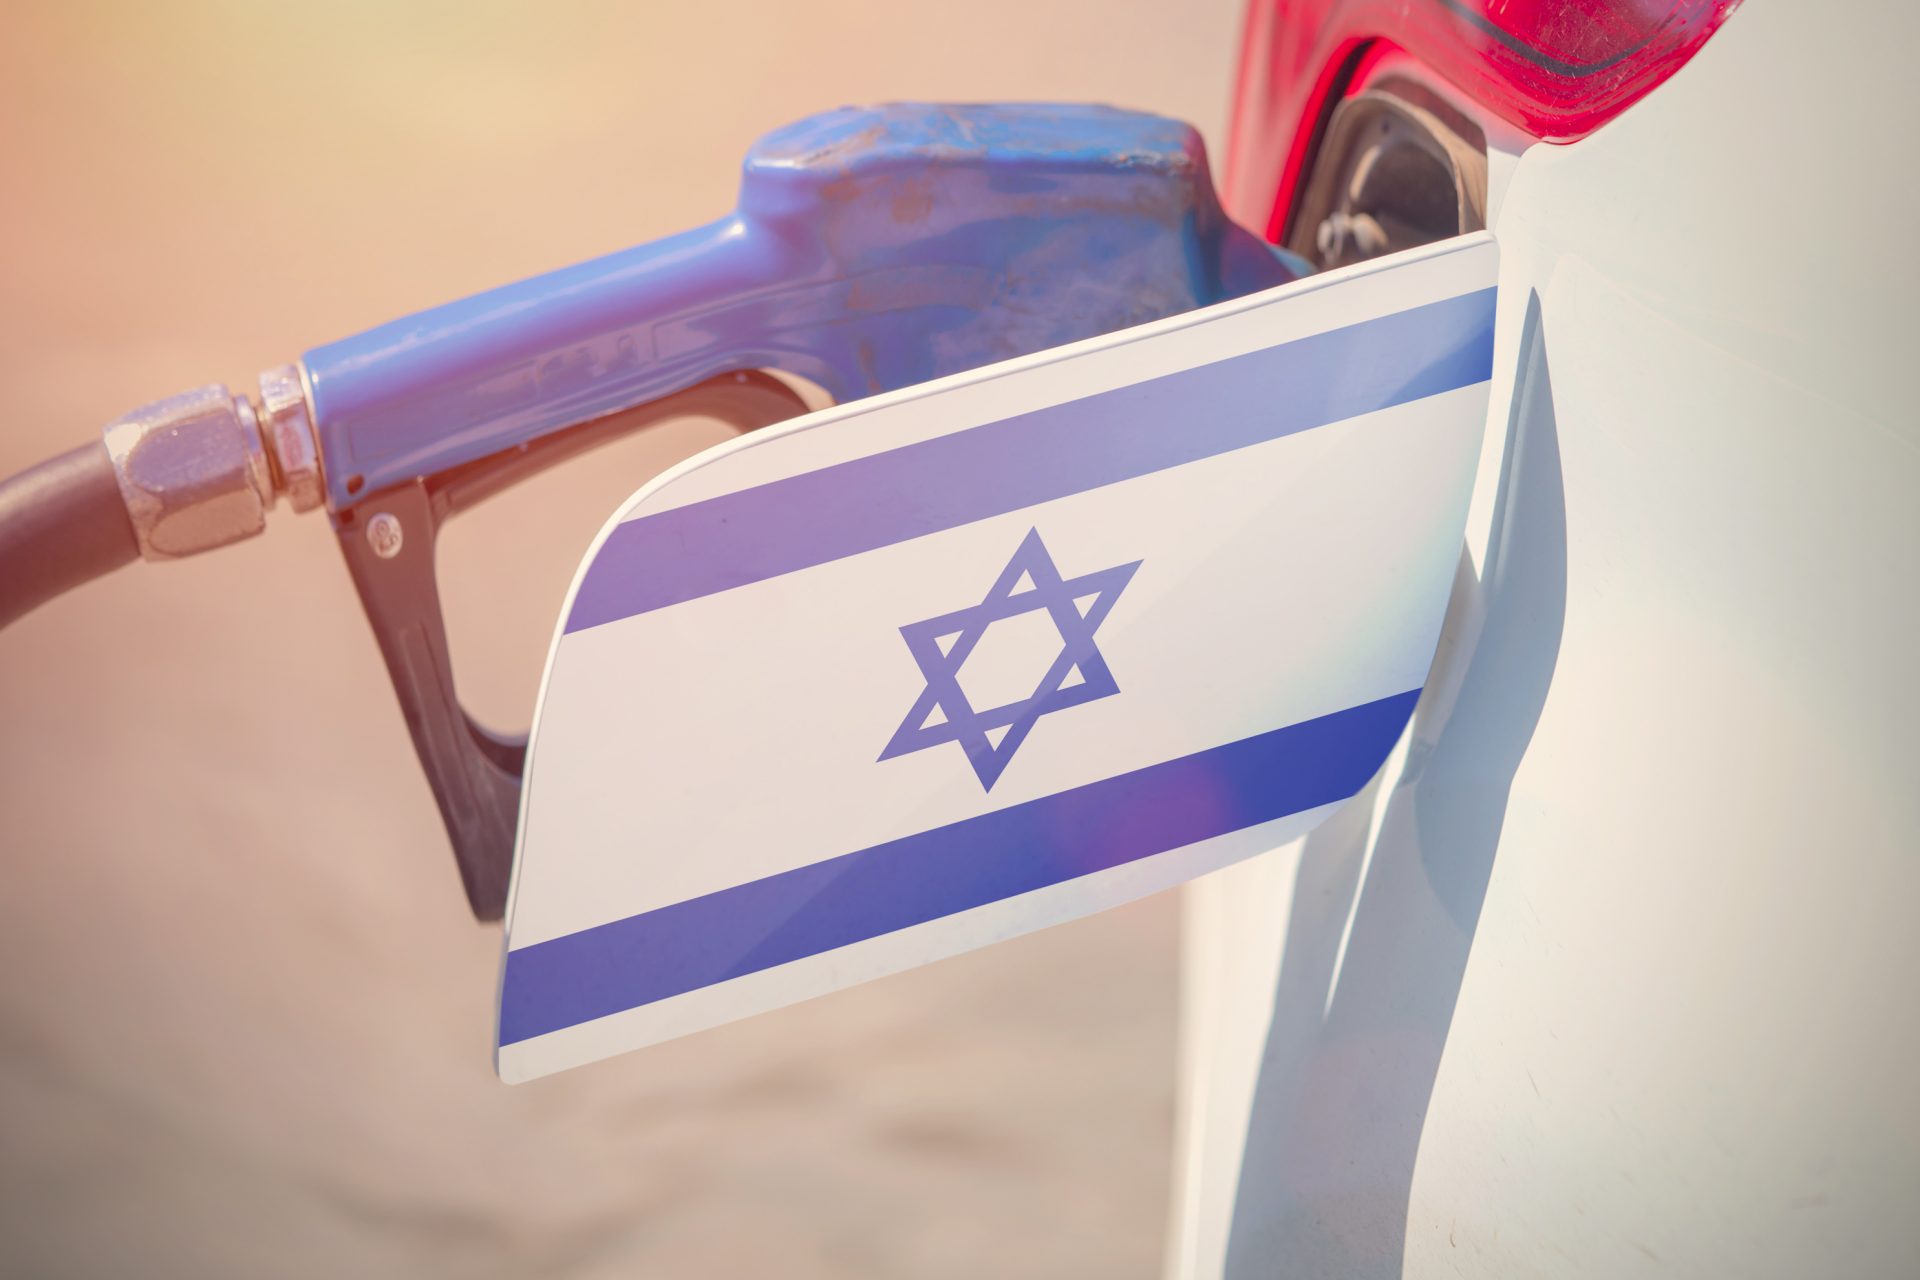 Guerre à Gaza fait flamber les prix de l'essence en Israël